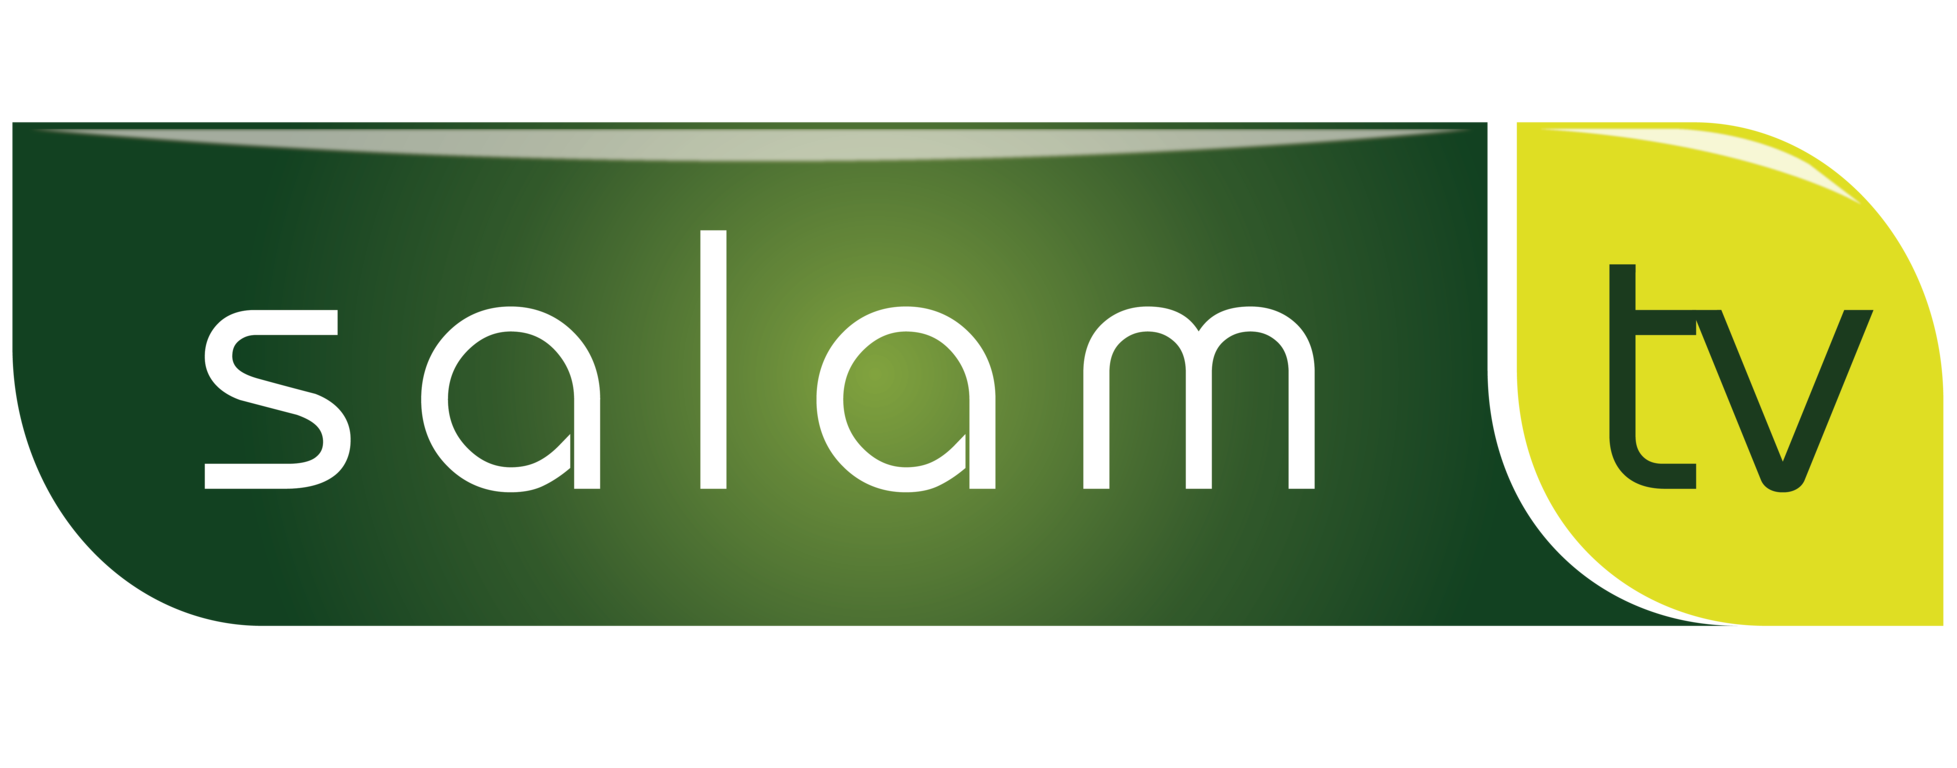 copy logo salamtv